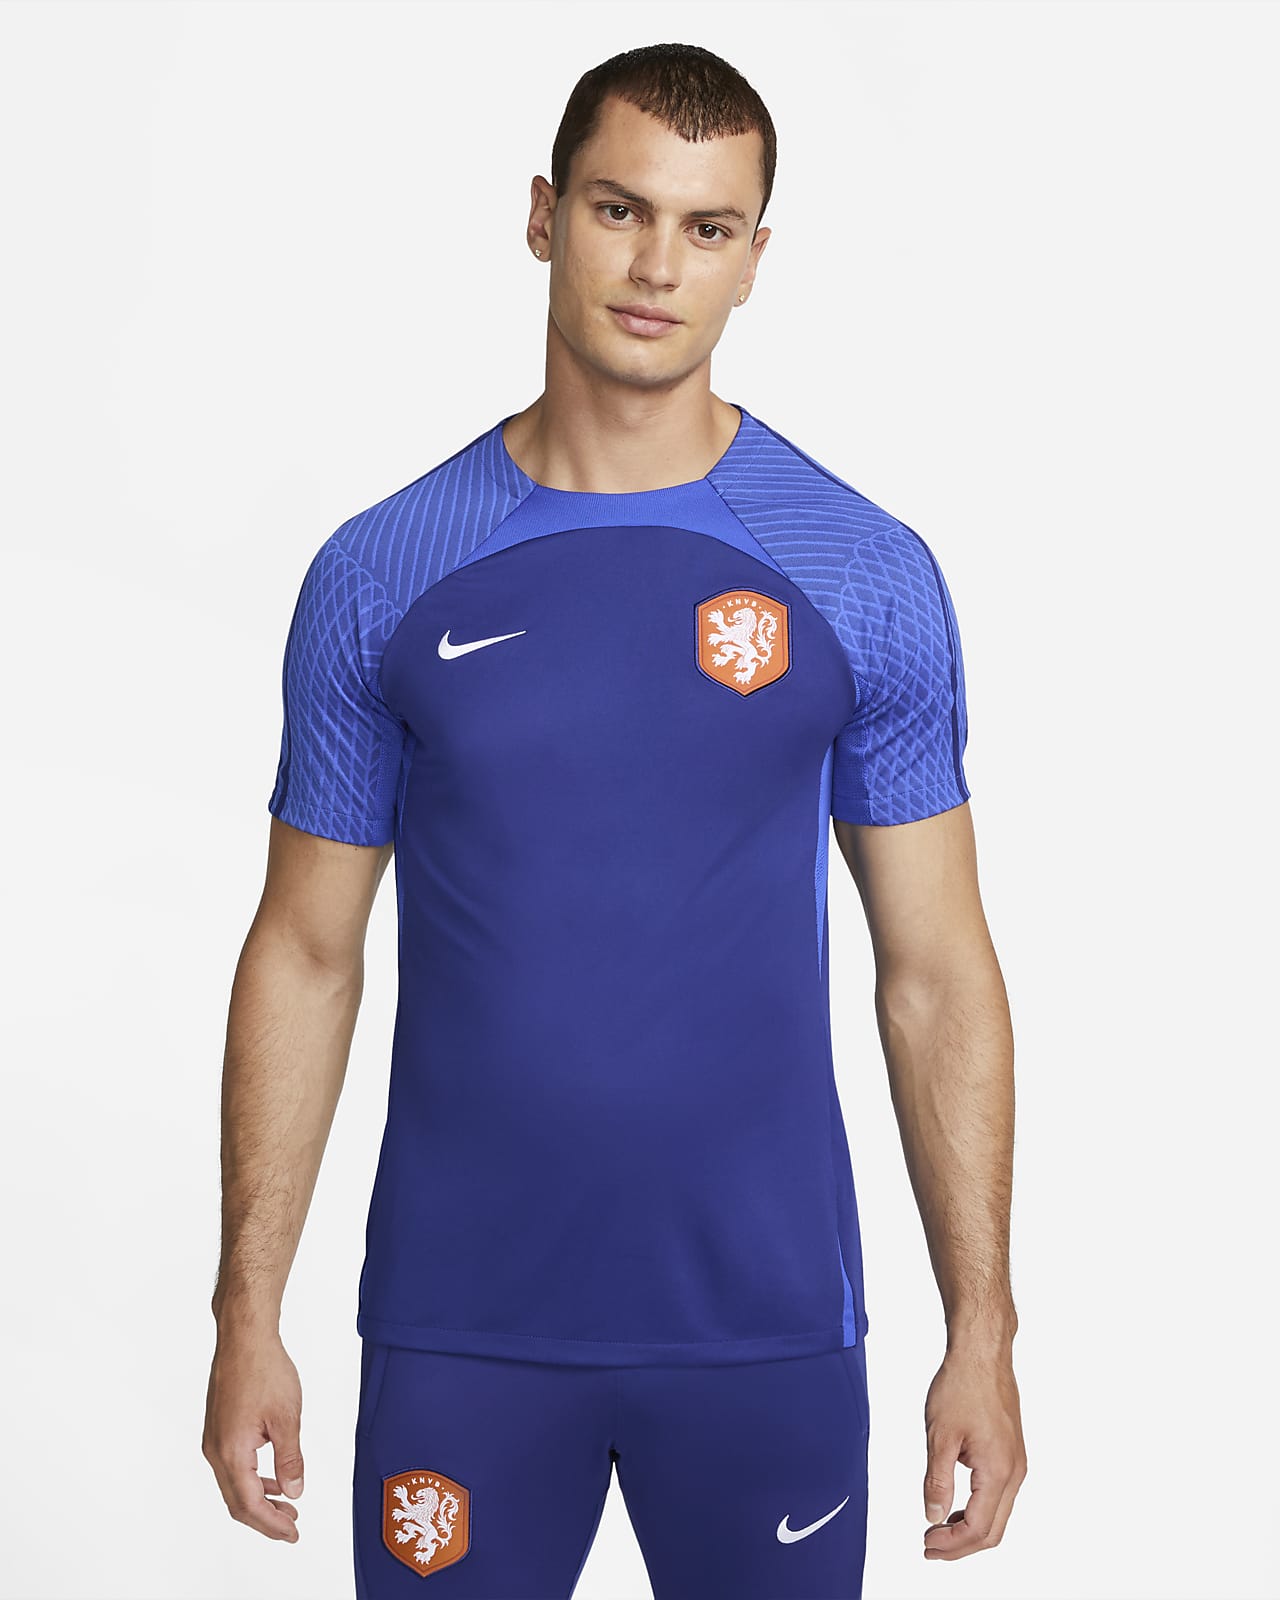 Netherlands Men's Nike Dri-FIT Pre-Match Soccer Top